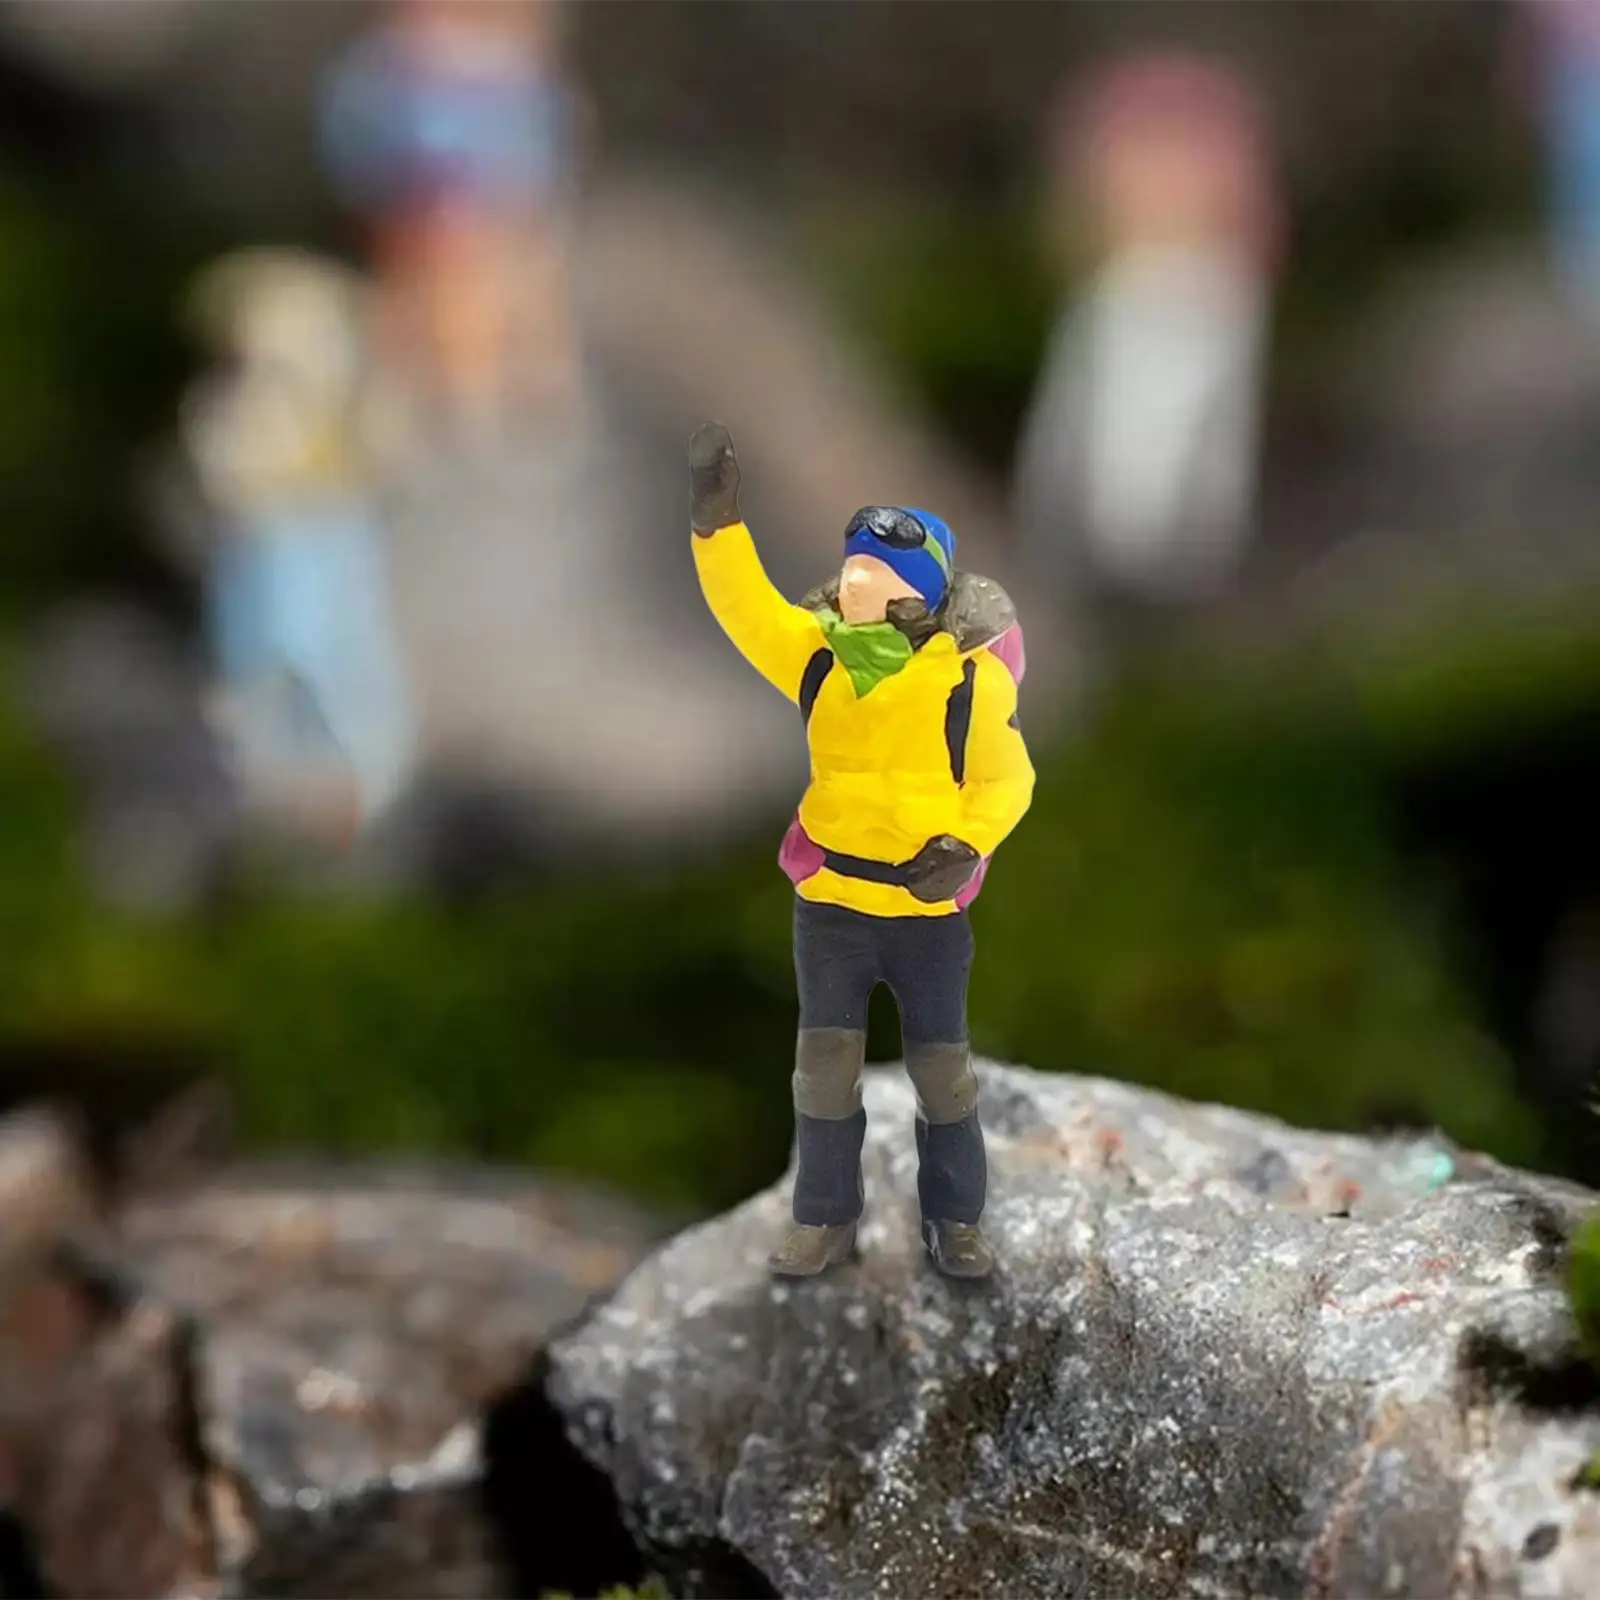 1/64 Climbing People Figures Miniature People Model for DIY Scene Layout